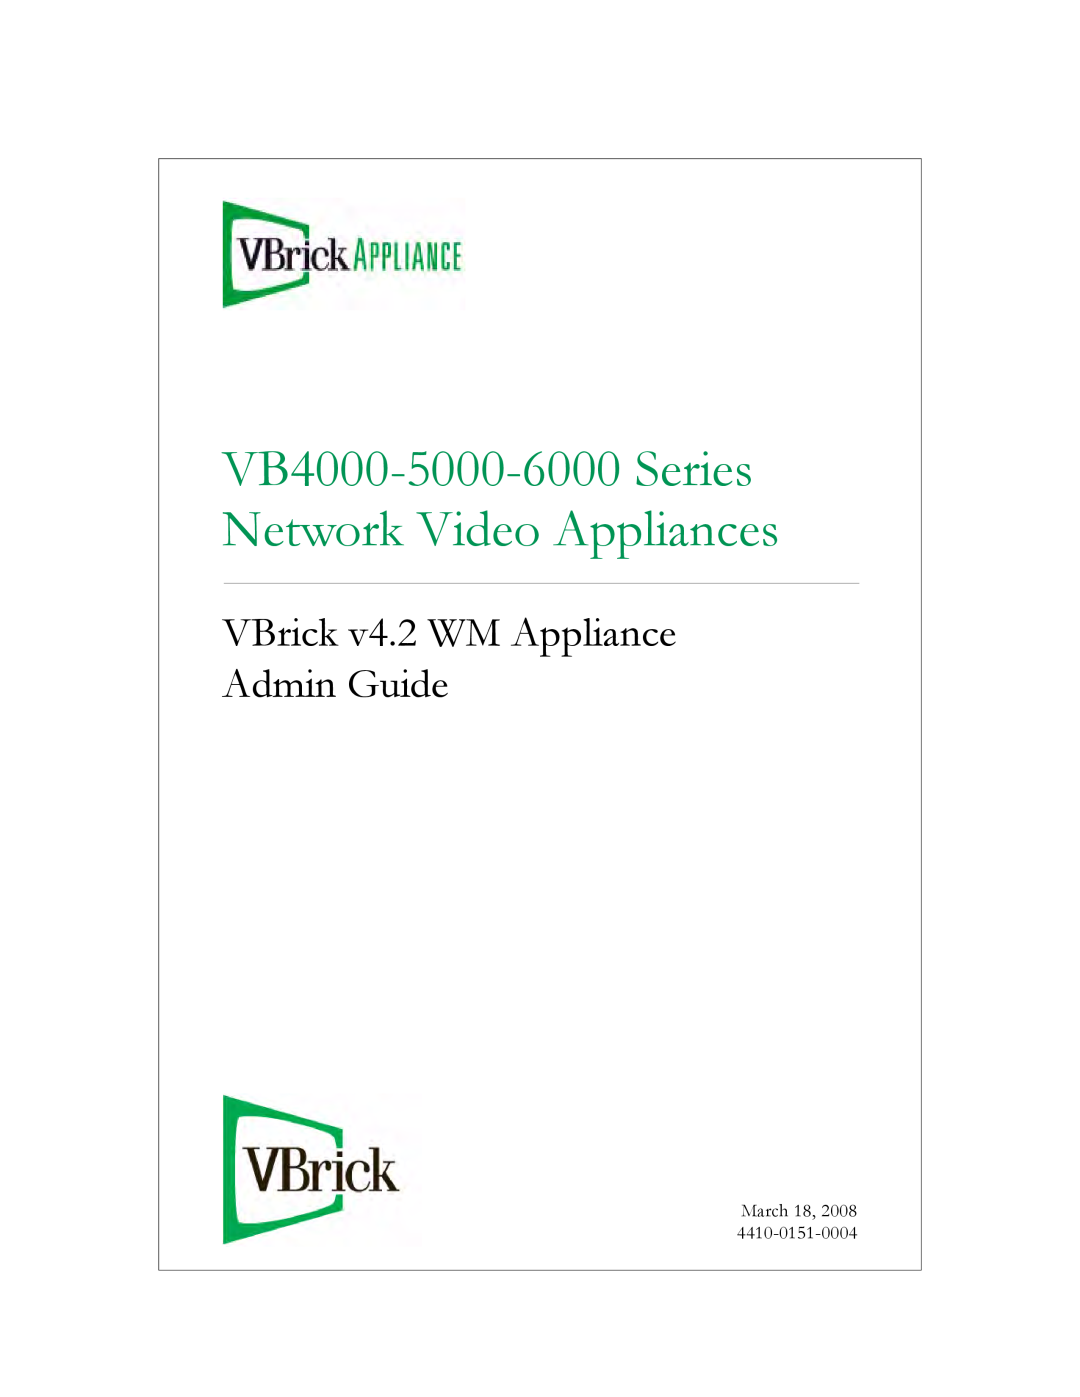 VBrick Systems manual VB4000-5000-6000 Series Network Video Appliances, VBrick v4.1 MPEG-2 Appliance Admin Guide 